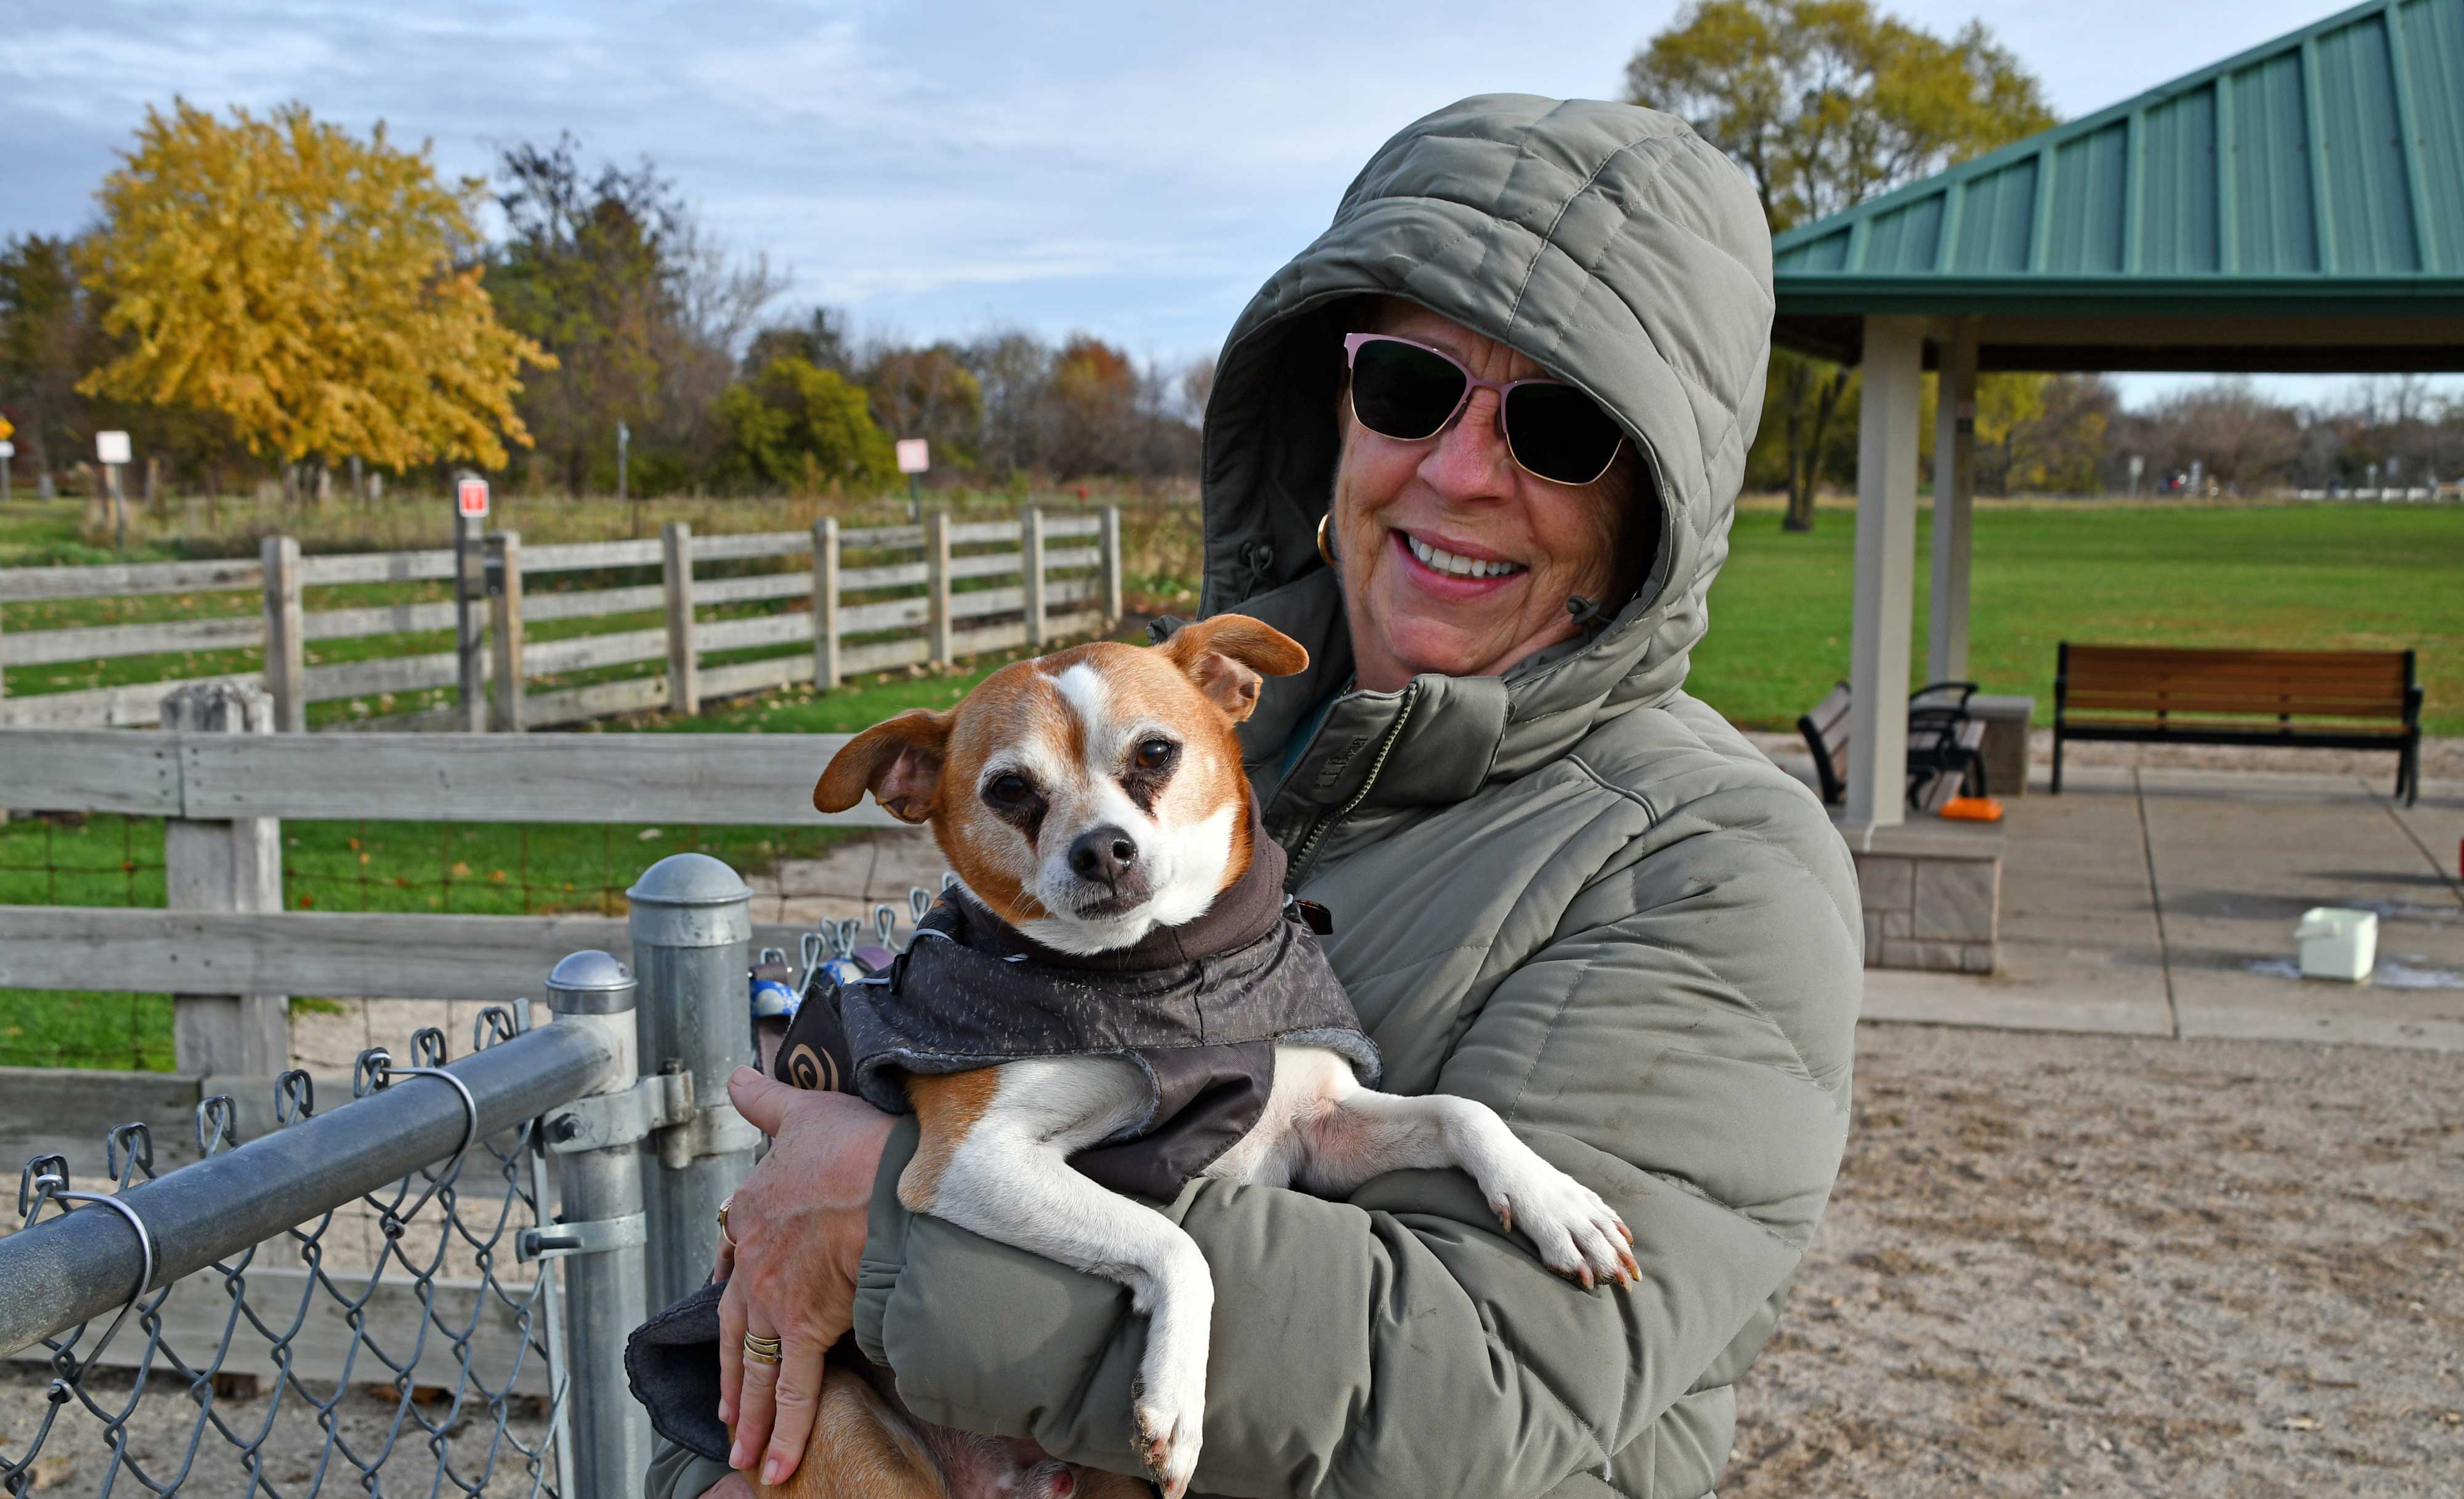 A dog park user holding a dog.